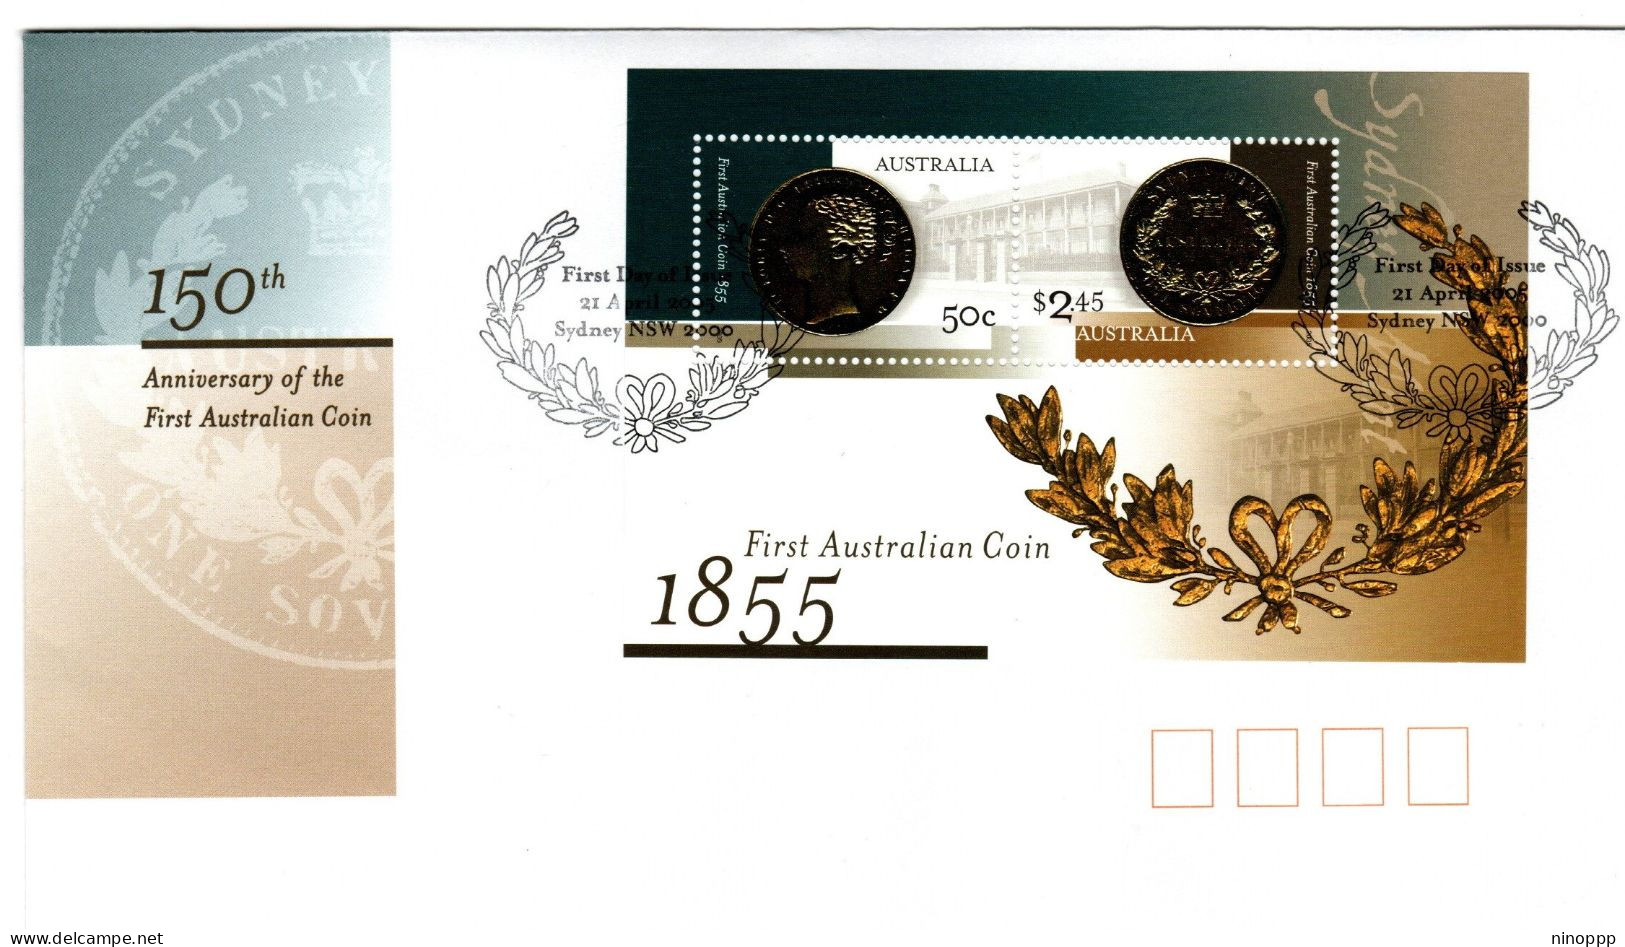 Australia 2004 150th Anniversary Of The First Australian Coin, MS,Sydney Postmark, FDI - Marcophilie